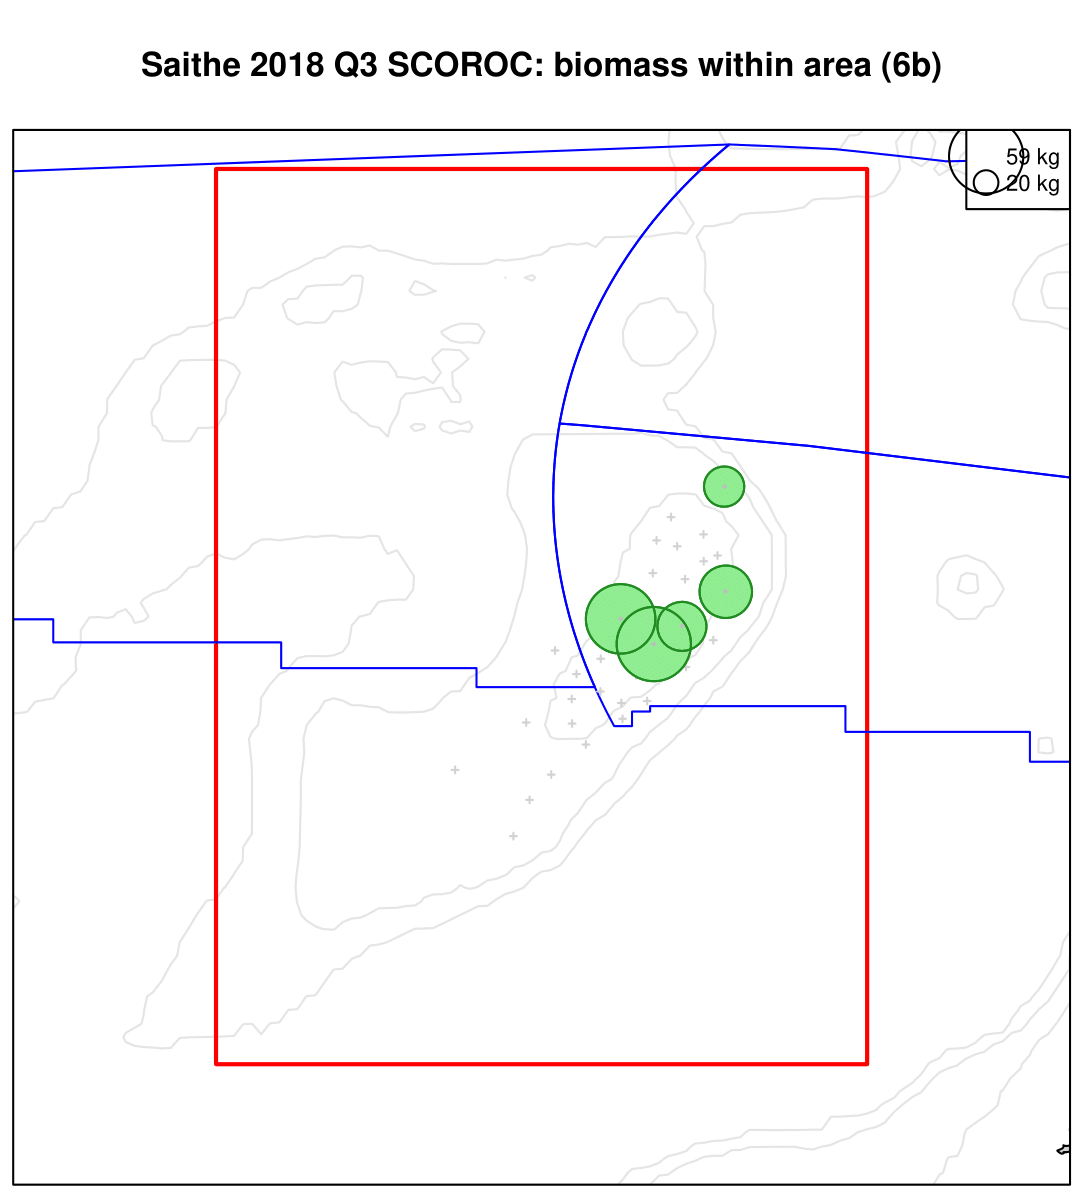 Saithe 2018 Q3 SCOROC: biomass within area (6b)